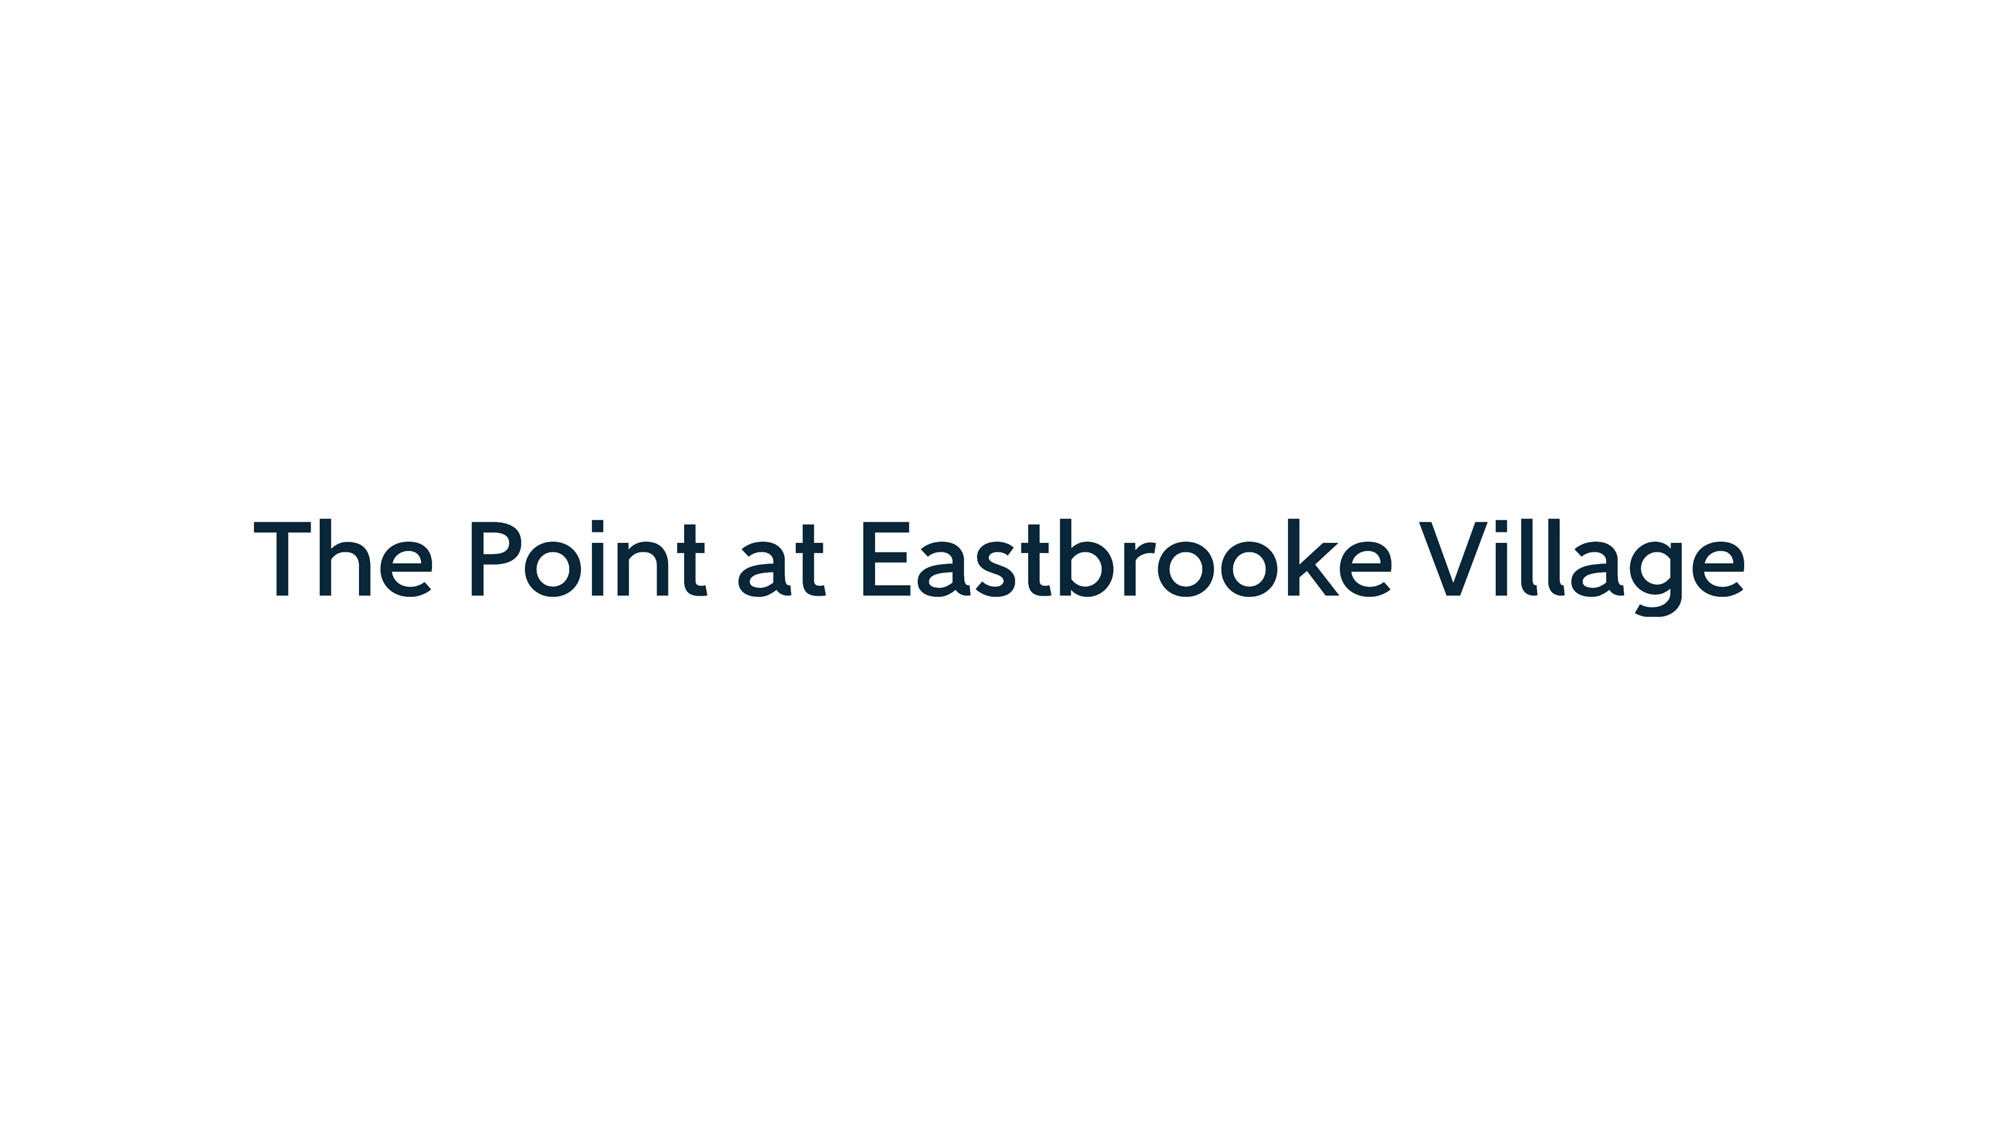 The Point at Eastbrooke Village development in Barking IG11